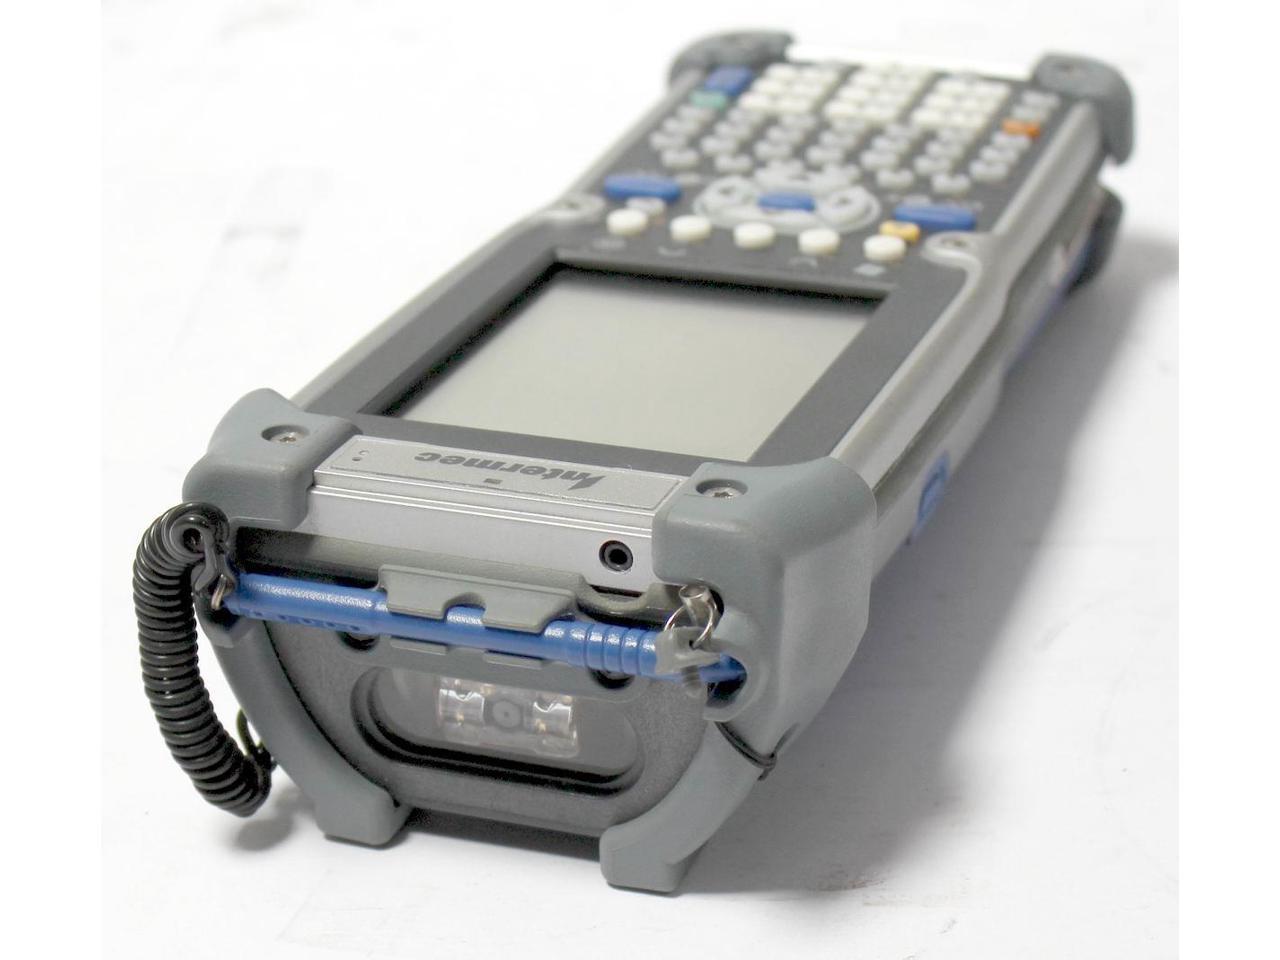 Intermec CK61NI Handheld Computer Barcode Scanner